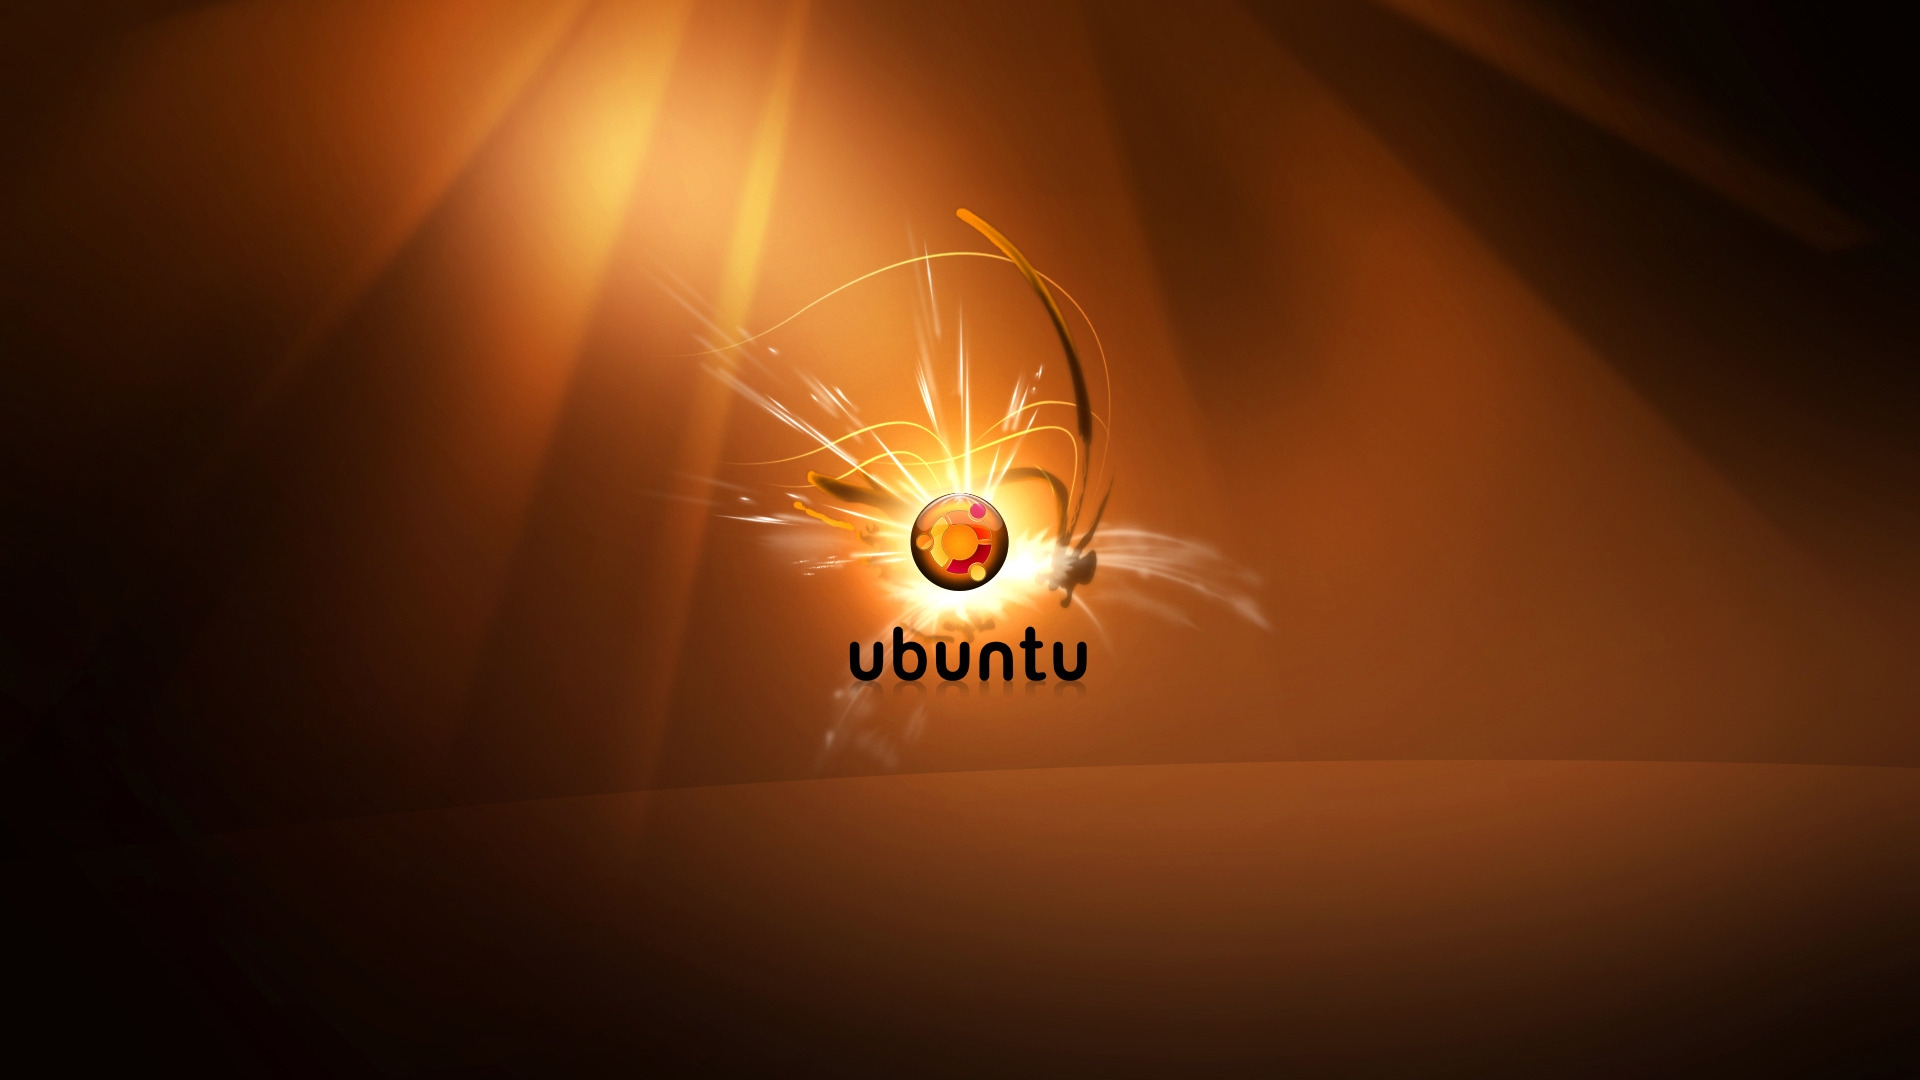 Creative Ubuntu Design for 1920 x 1080 HDTV 1080p resolution